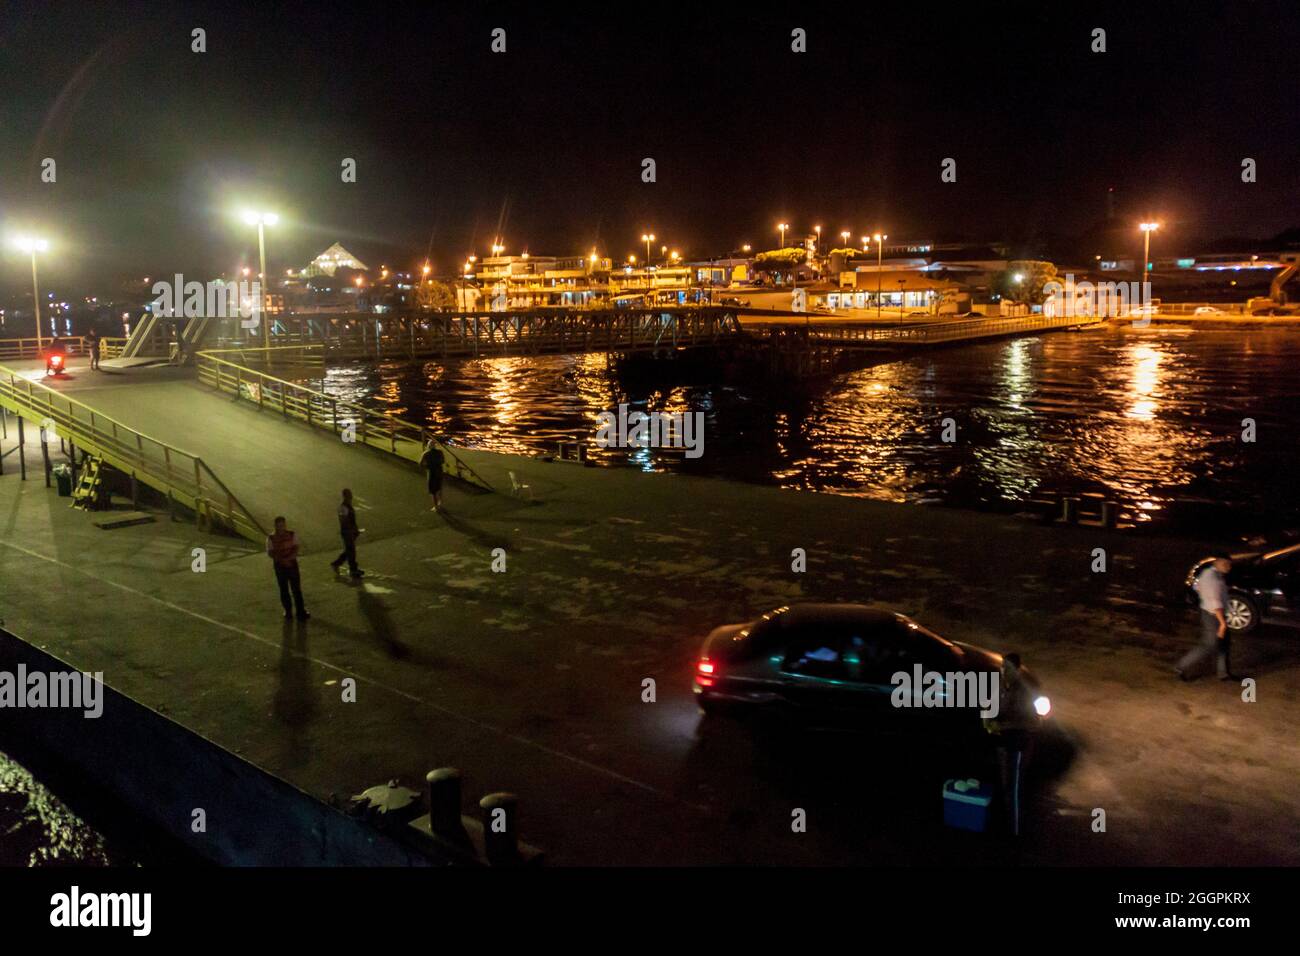 ITACOATIARA, BRAZIL - JUNE 23, 2015: Night view of a pier at the river port of Itacoatiara town, Brazil. Stock Photo